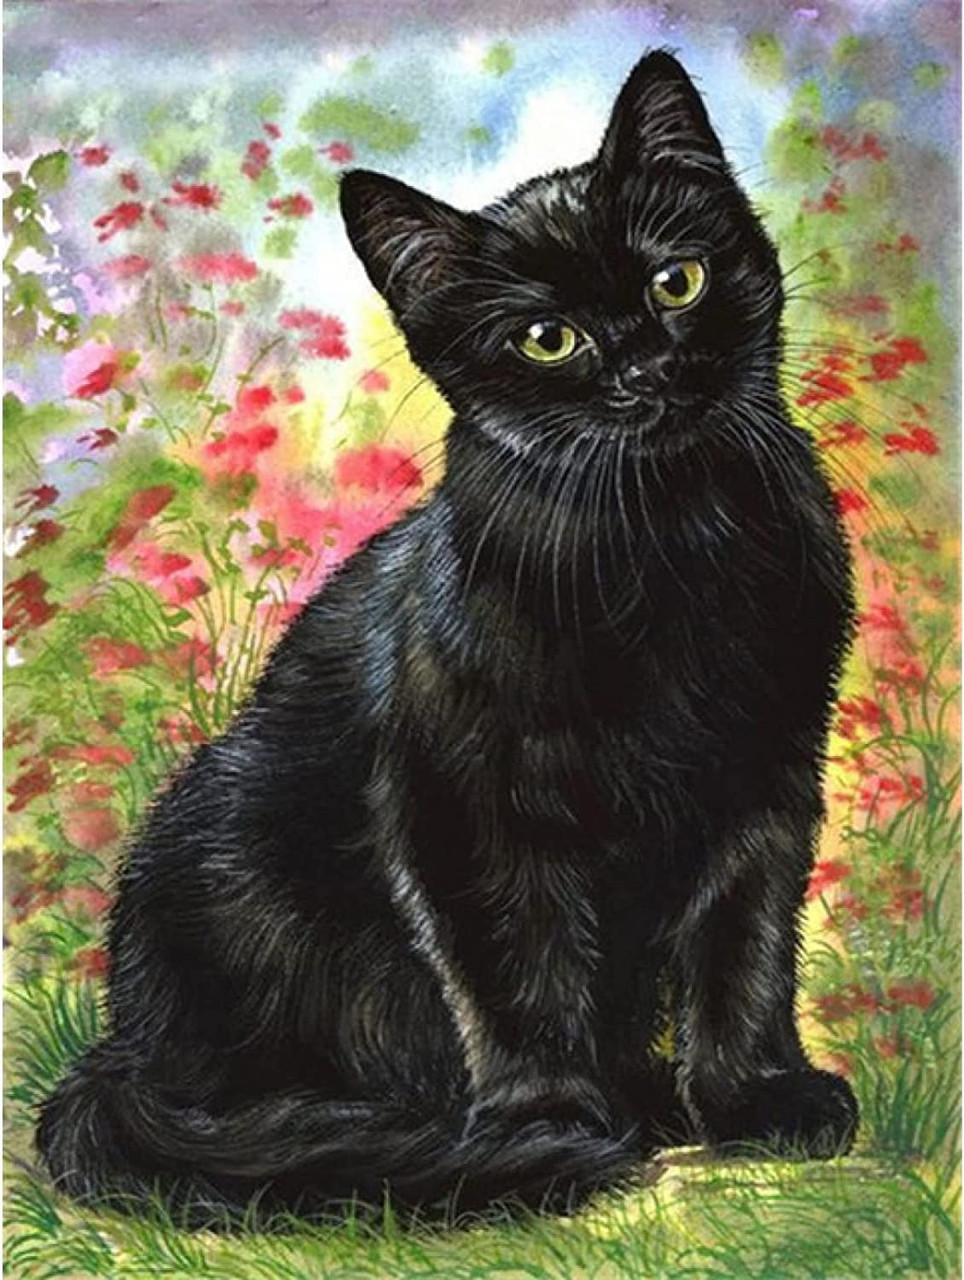 5D Diamond Painting Black Cat in the Wild Flowers Kit - Bonanza Marketplace